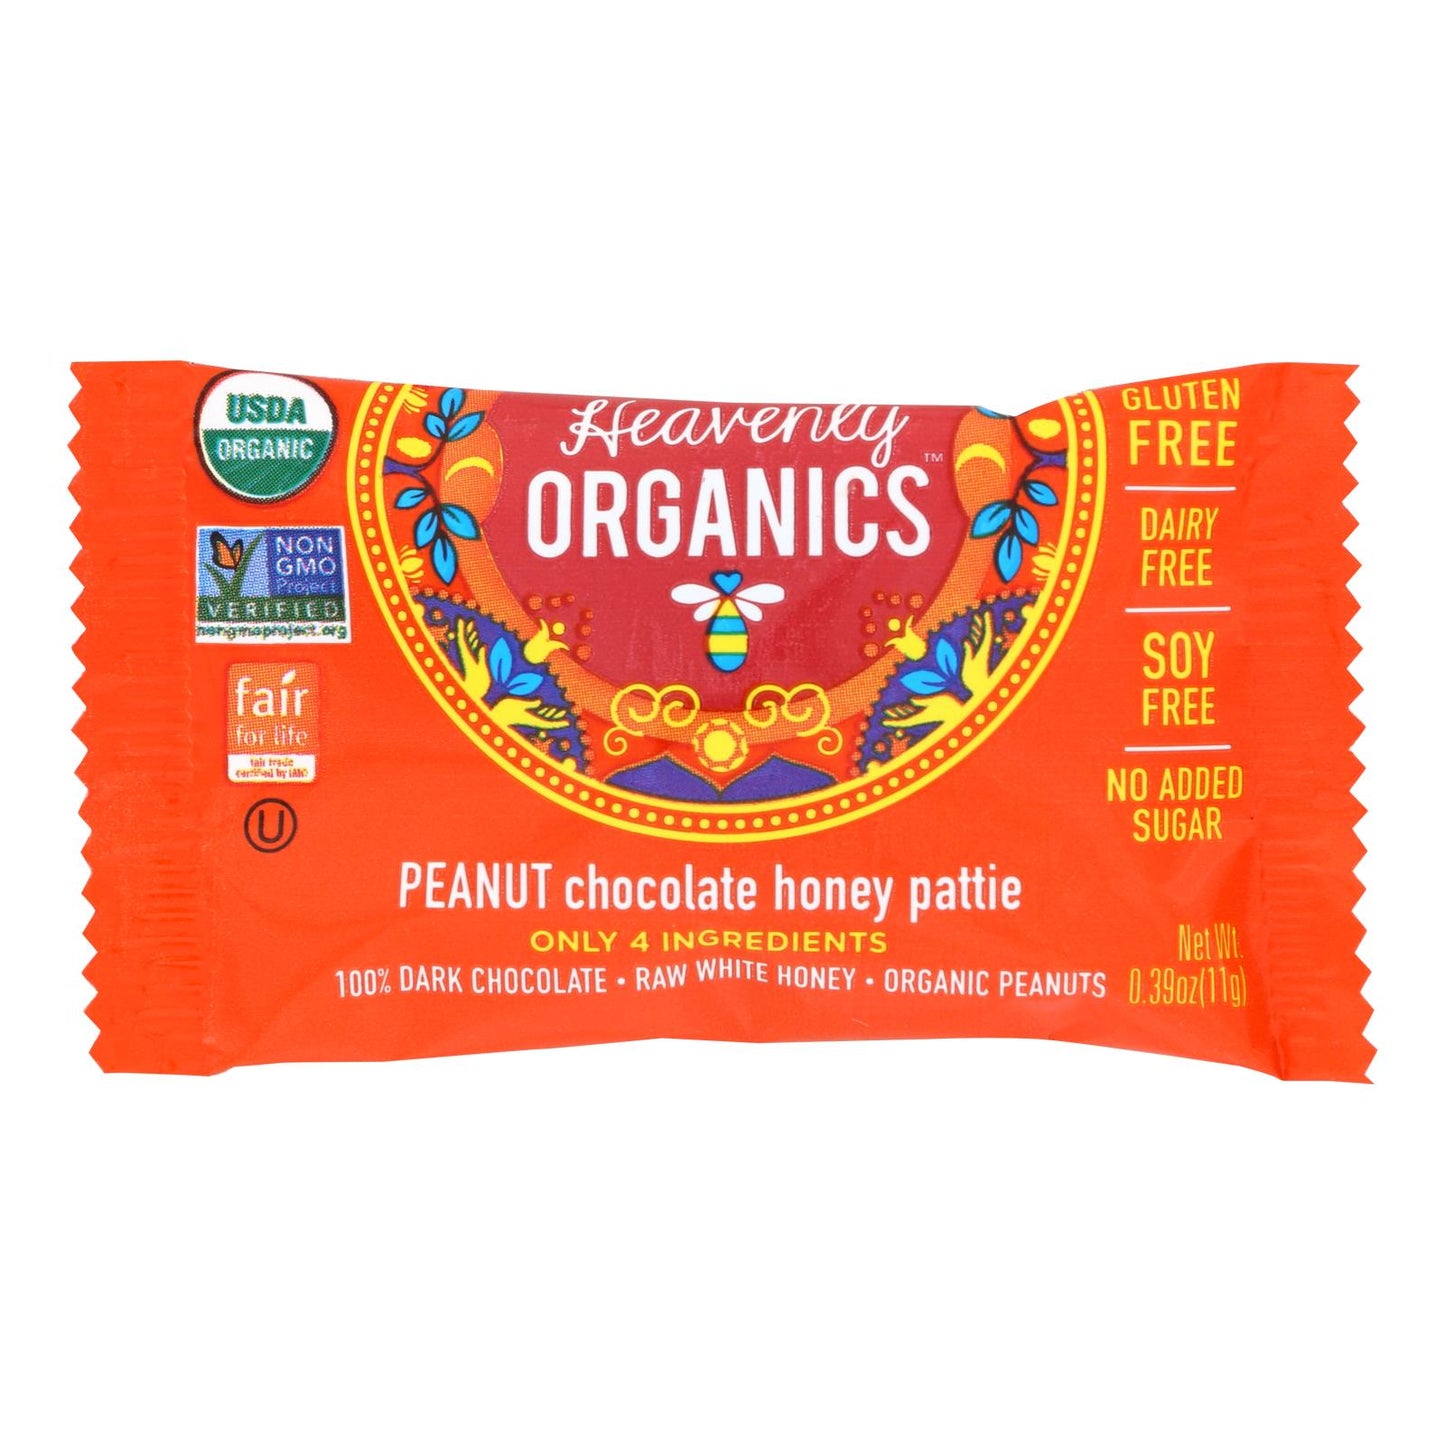 Heavenly Organics Heavenly Organics Chocolate Honey Patties - Peanut - Case Of 40 - 0.39 Oz.